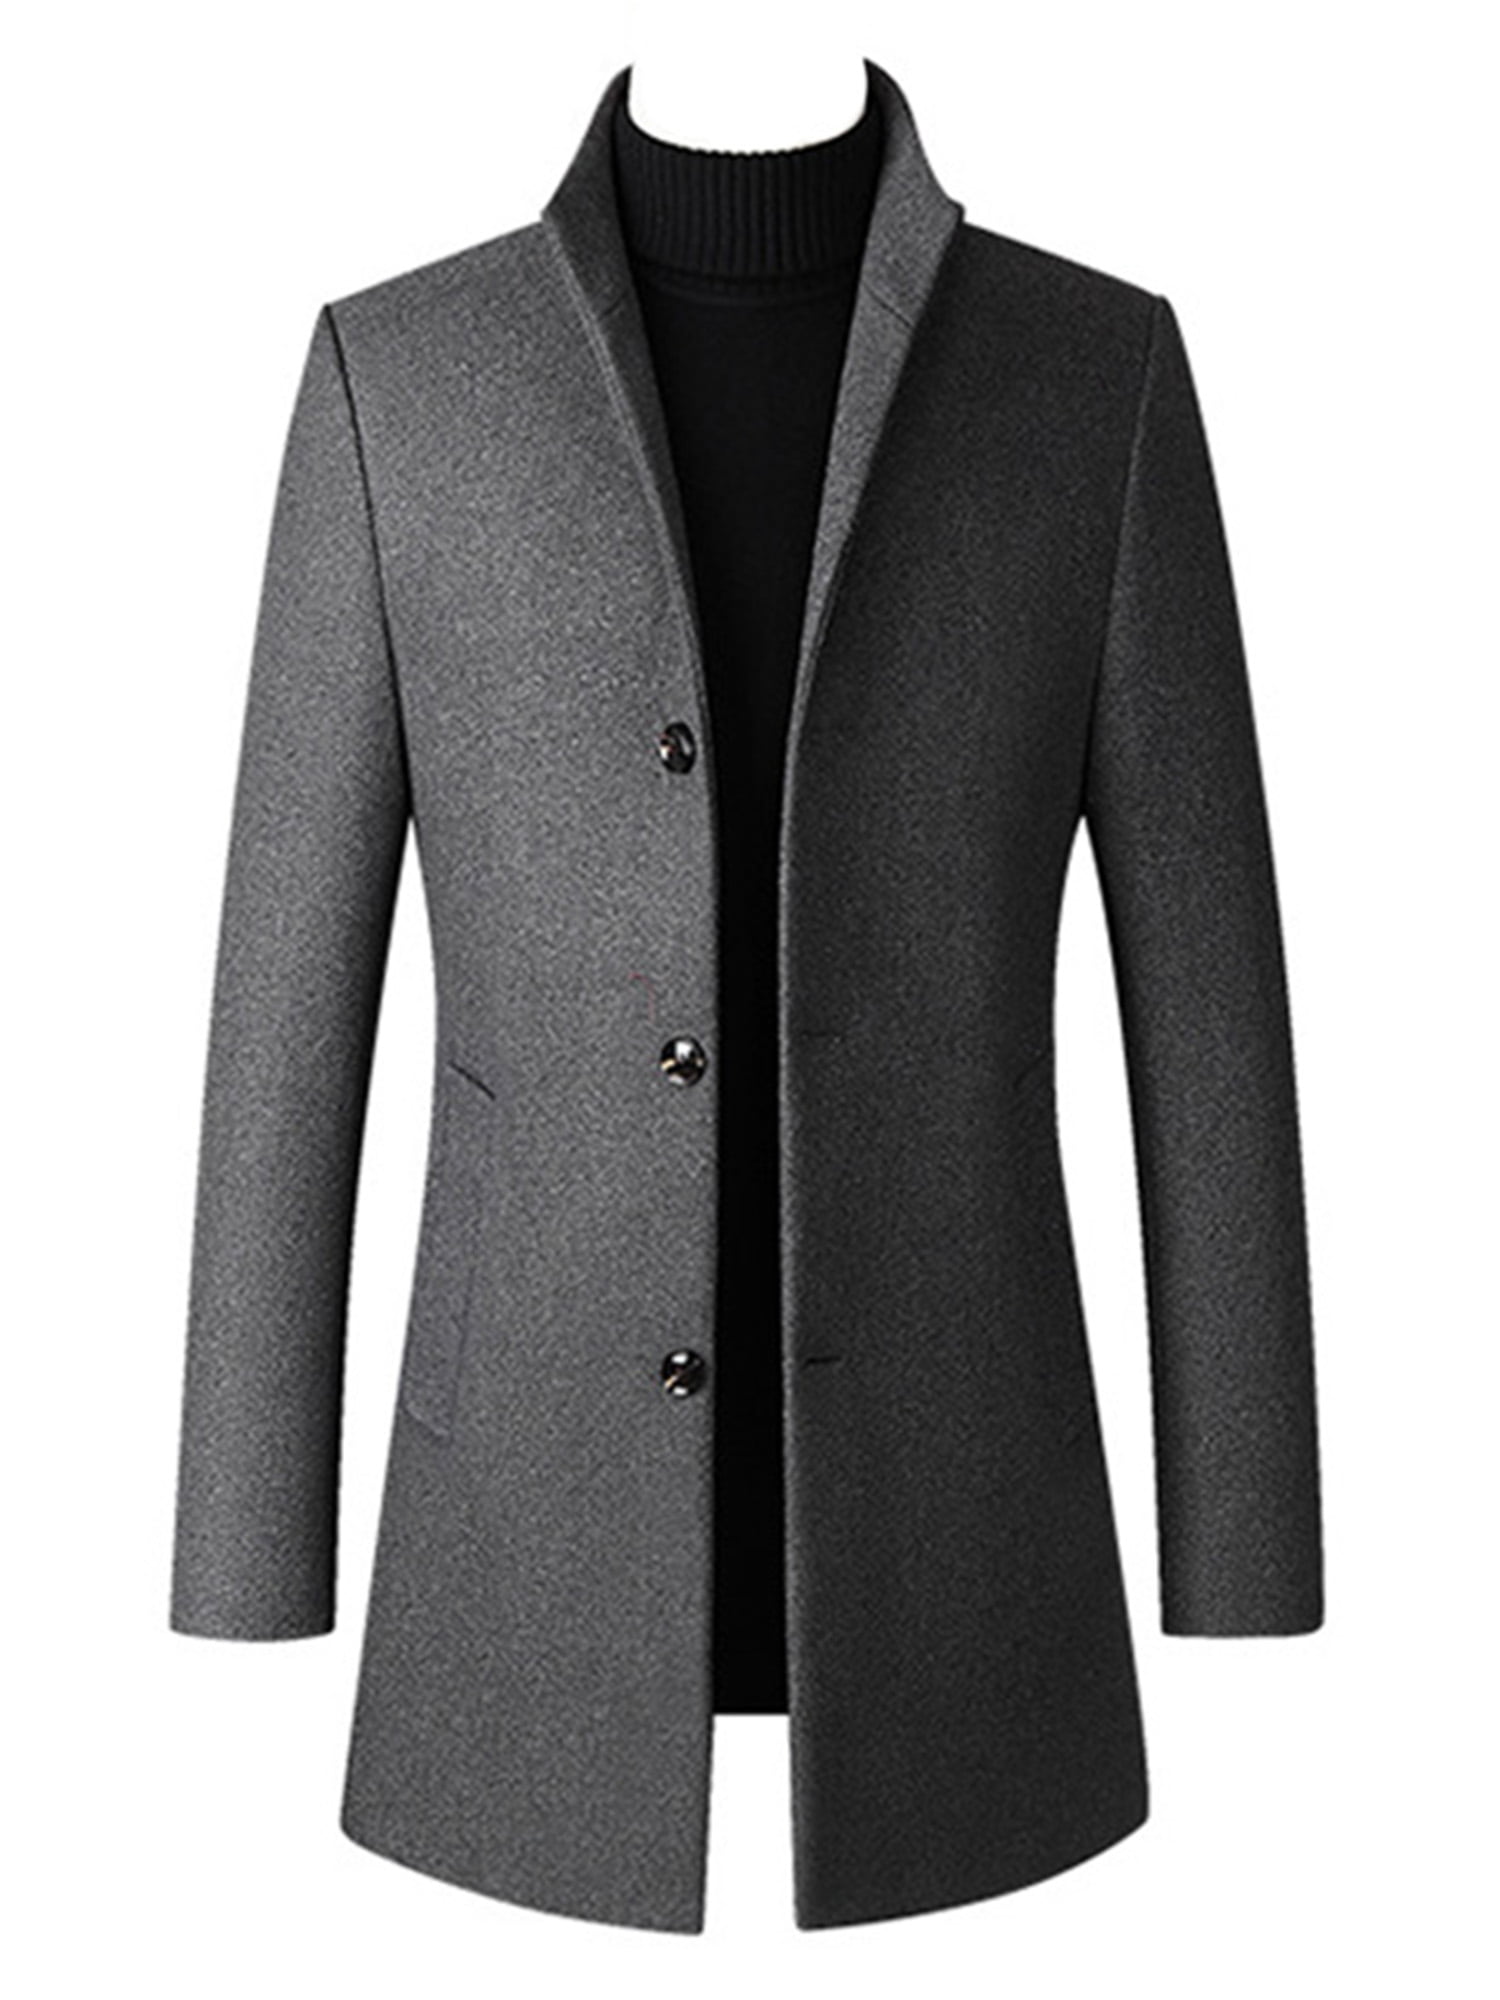 iCKER Mens Wool Coat Long Trench Coat Peacoat Jacket Slim Fit Casual Overcoat Outwear 